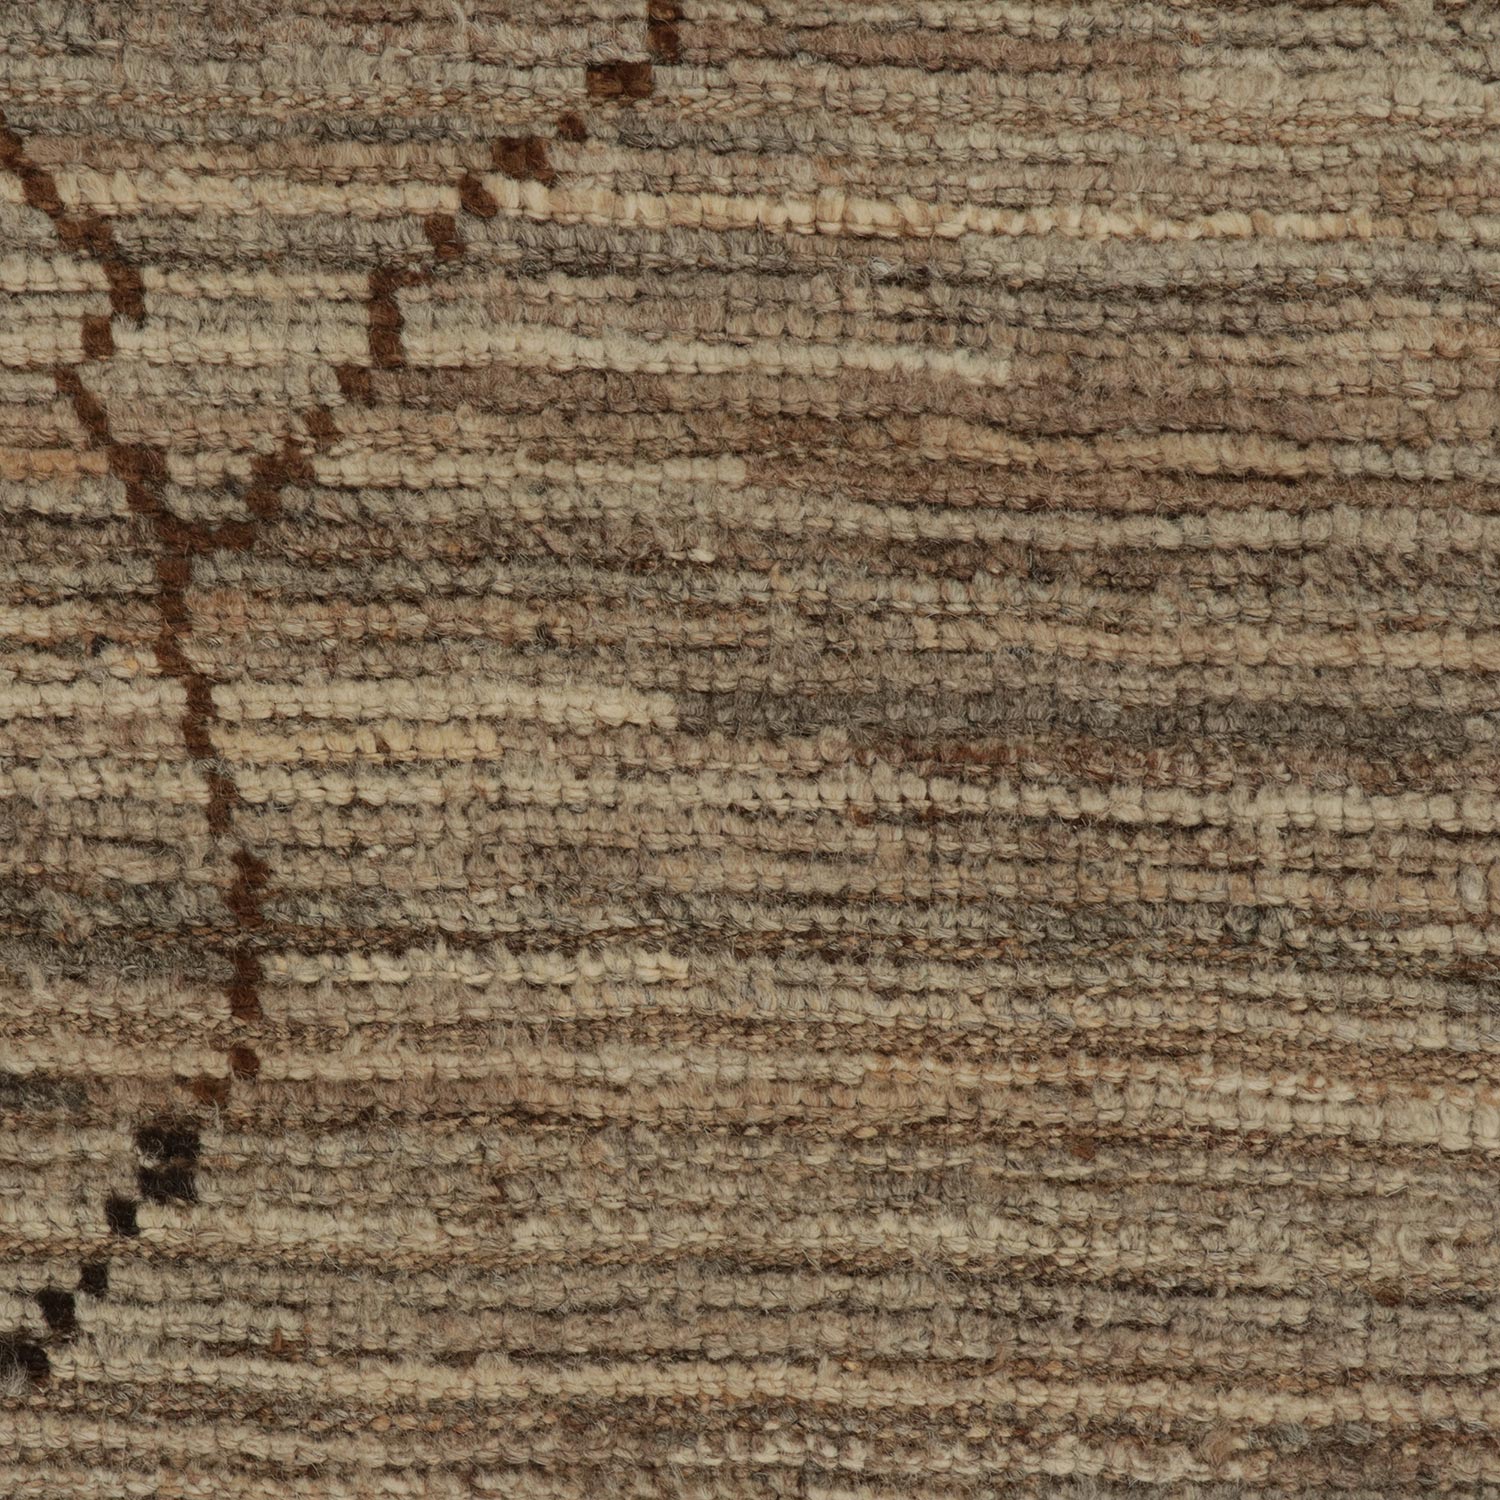 Brown Moroccan Wool Rug - 8'3" x 9'8"